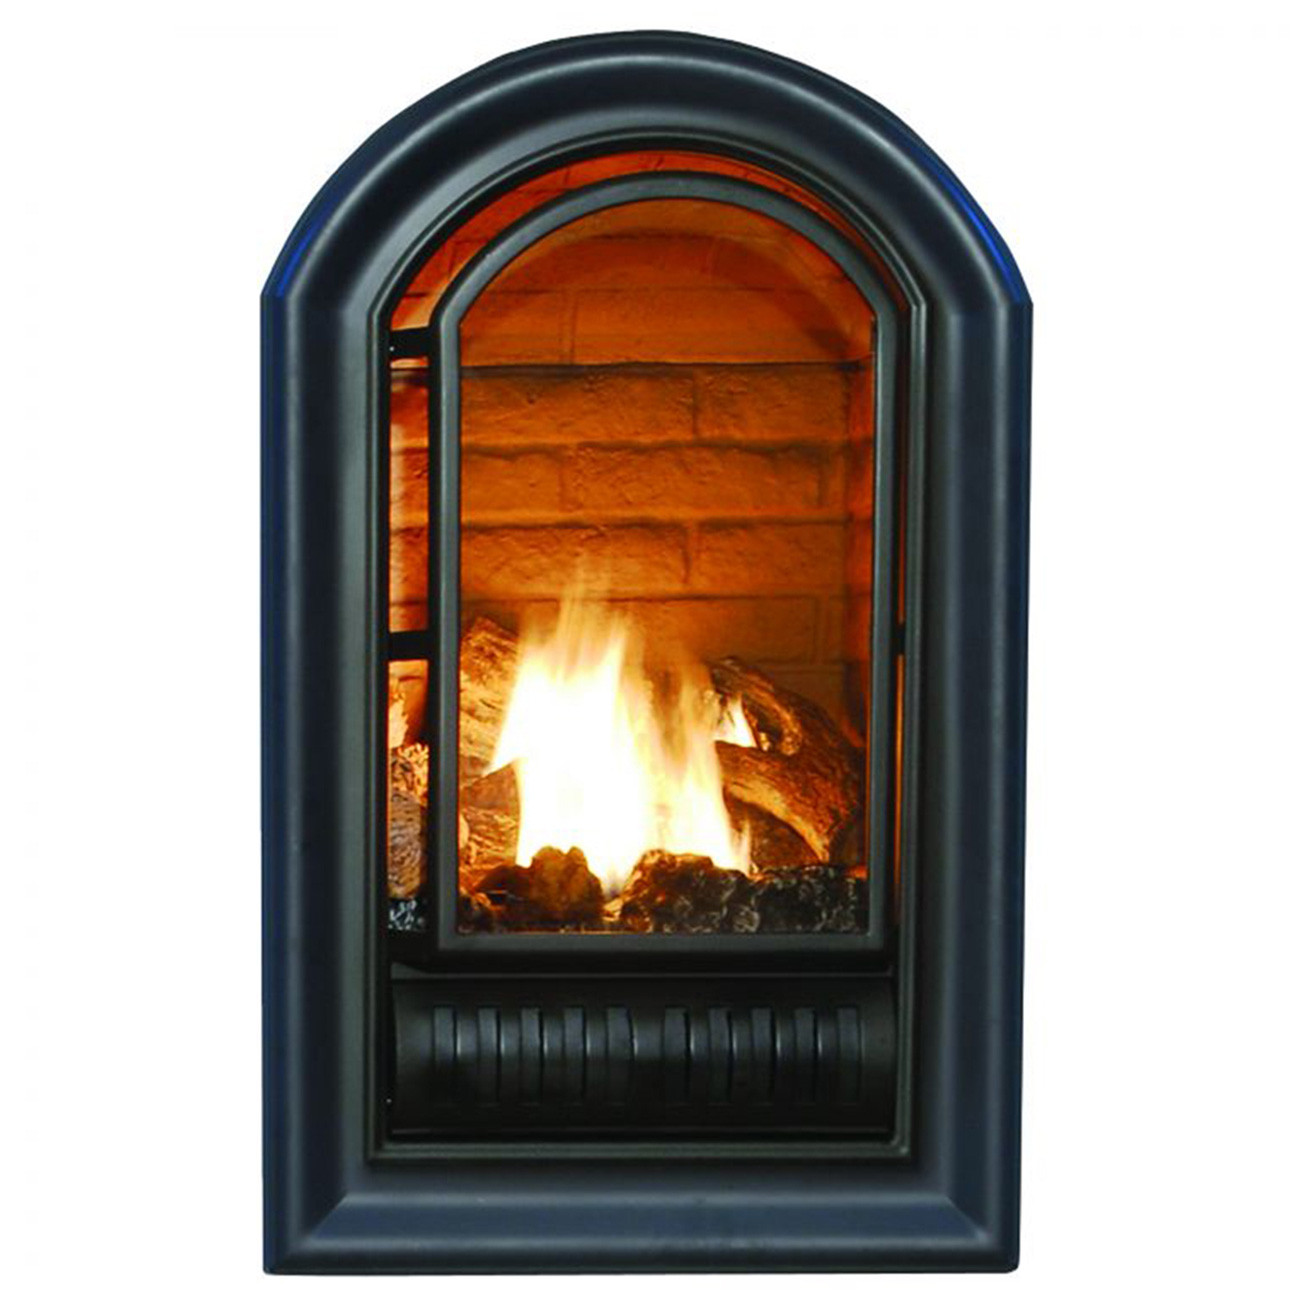 Best ideas about Ventless Propane Fireplace
. Save or Pin Ventless Liquid Propane Fireplace Insert 20 000 BTU Now.